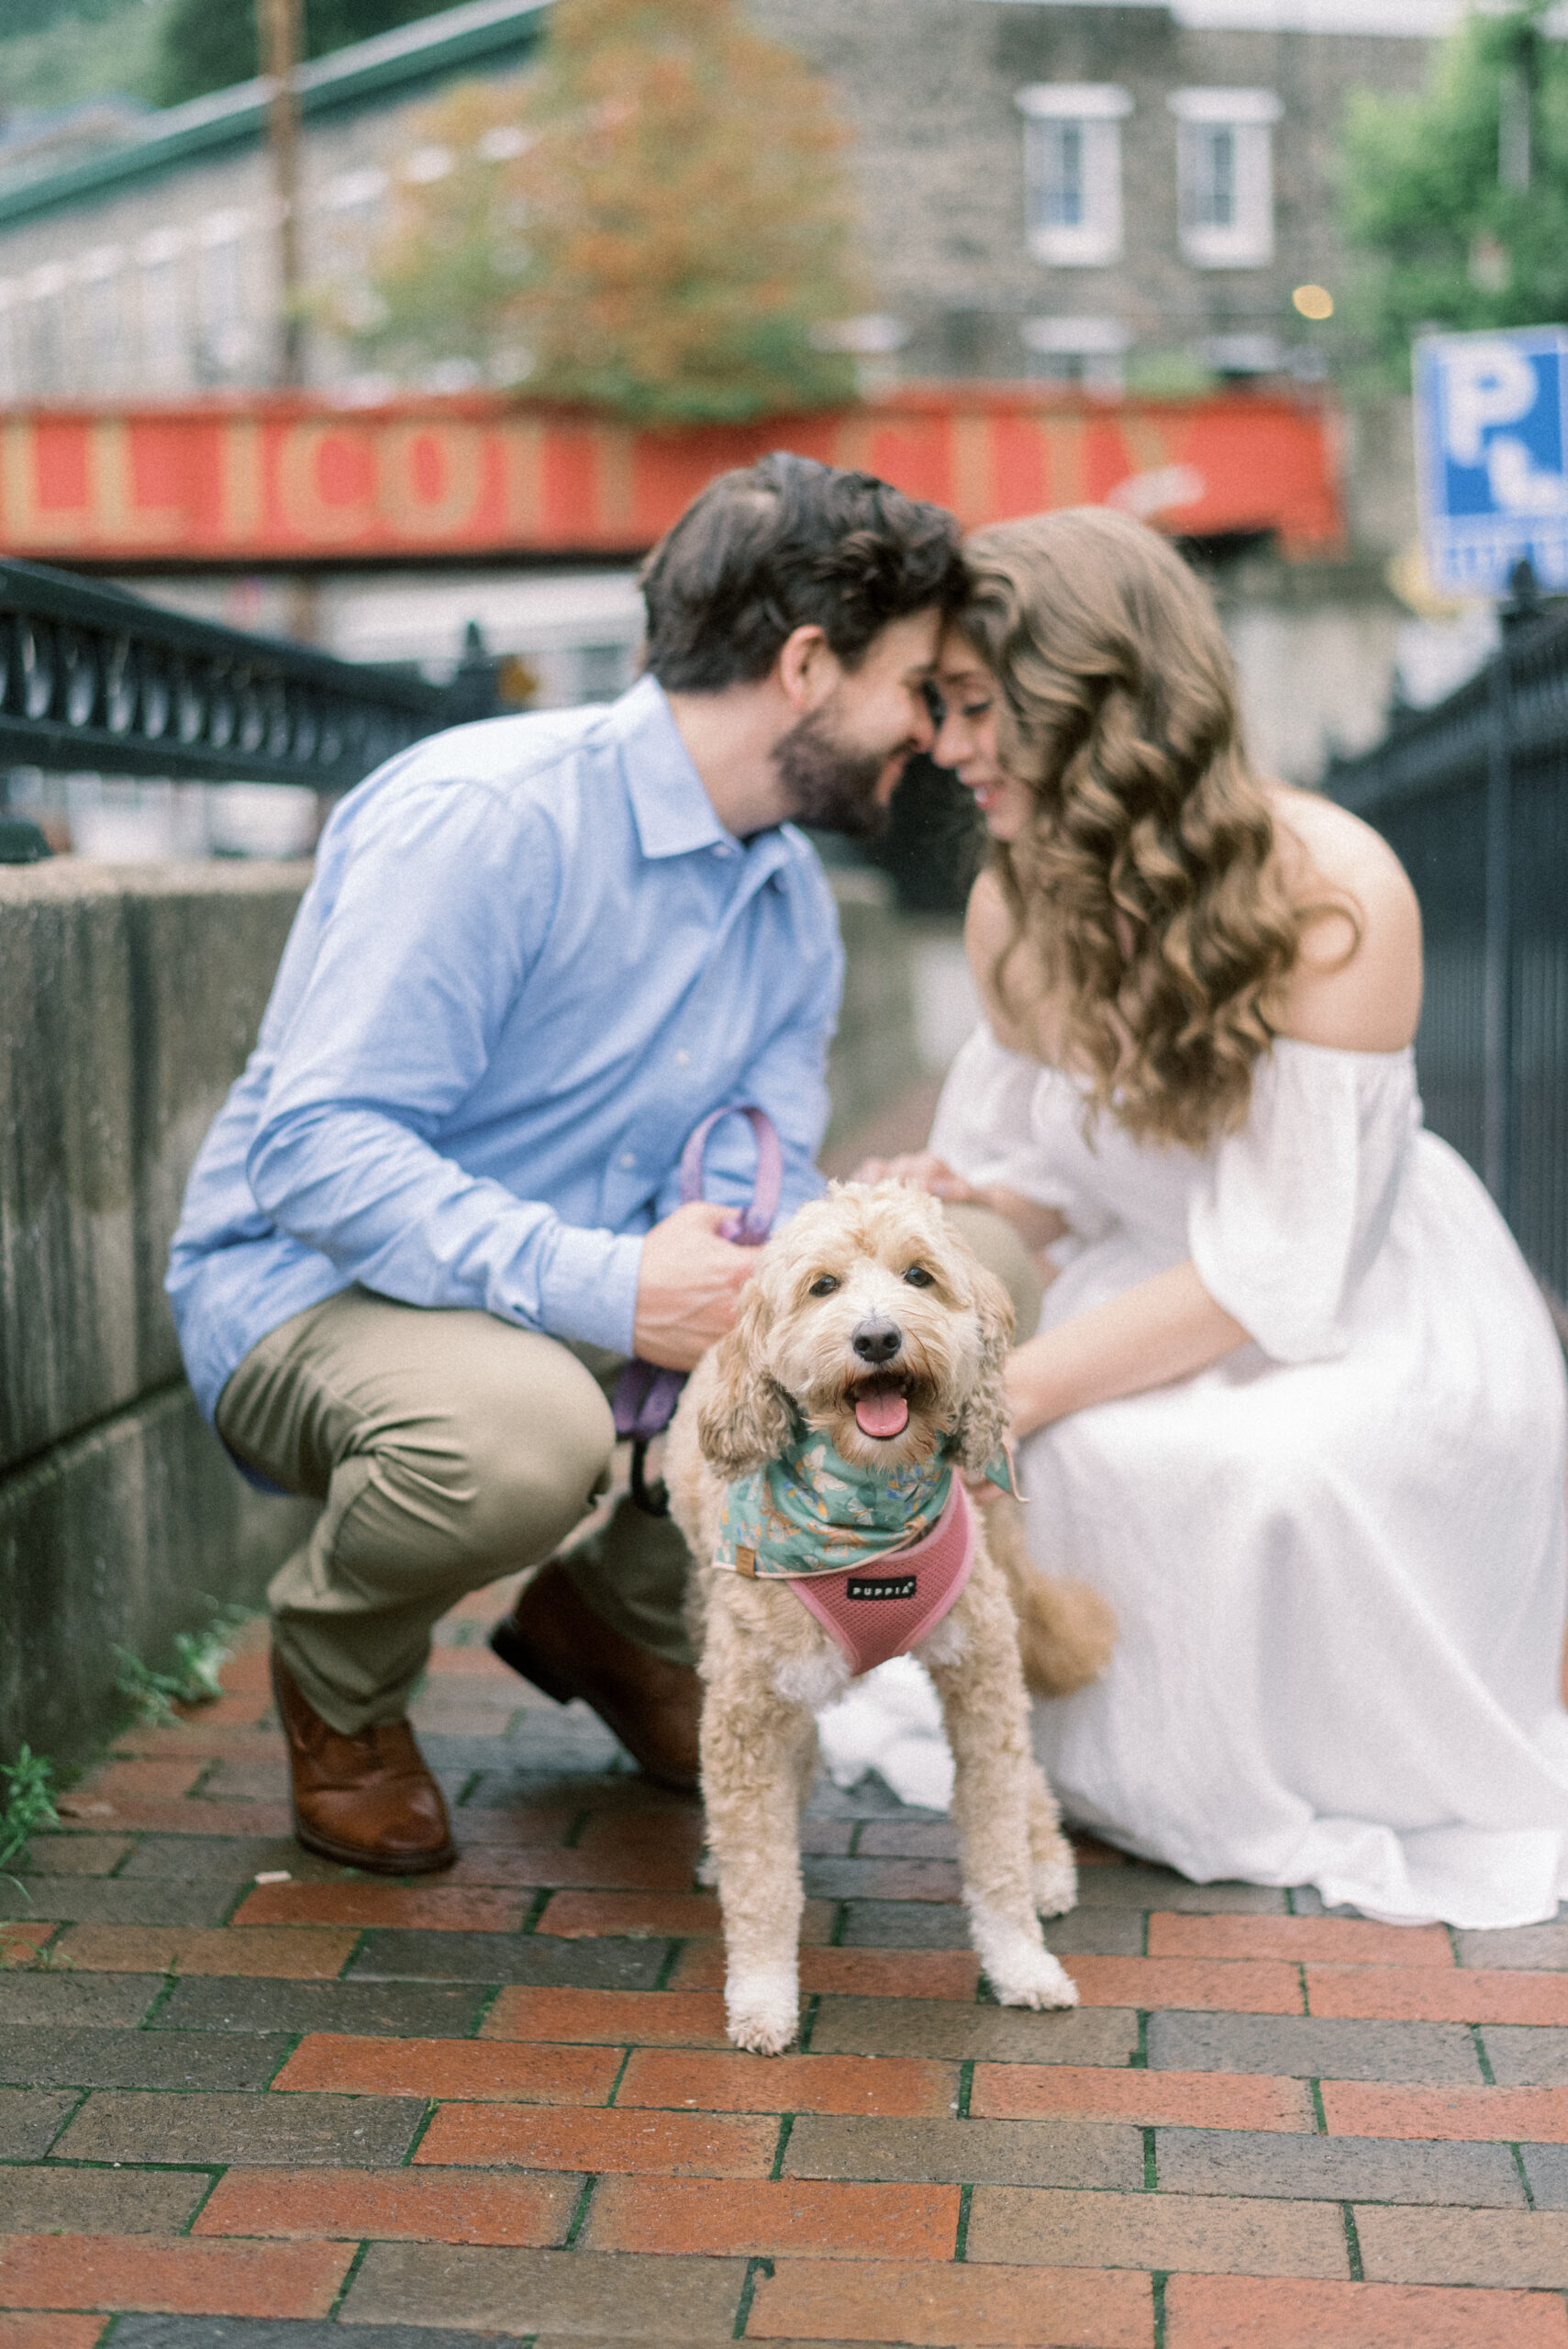 Maryland wedding photographer captures couple kissing while holding puppy on leash during engagement photos